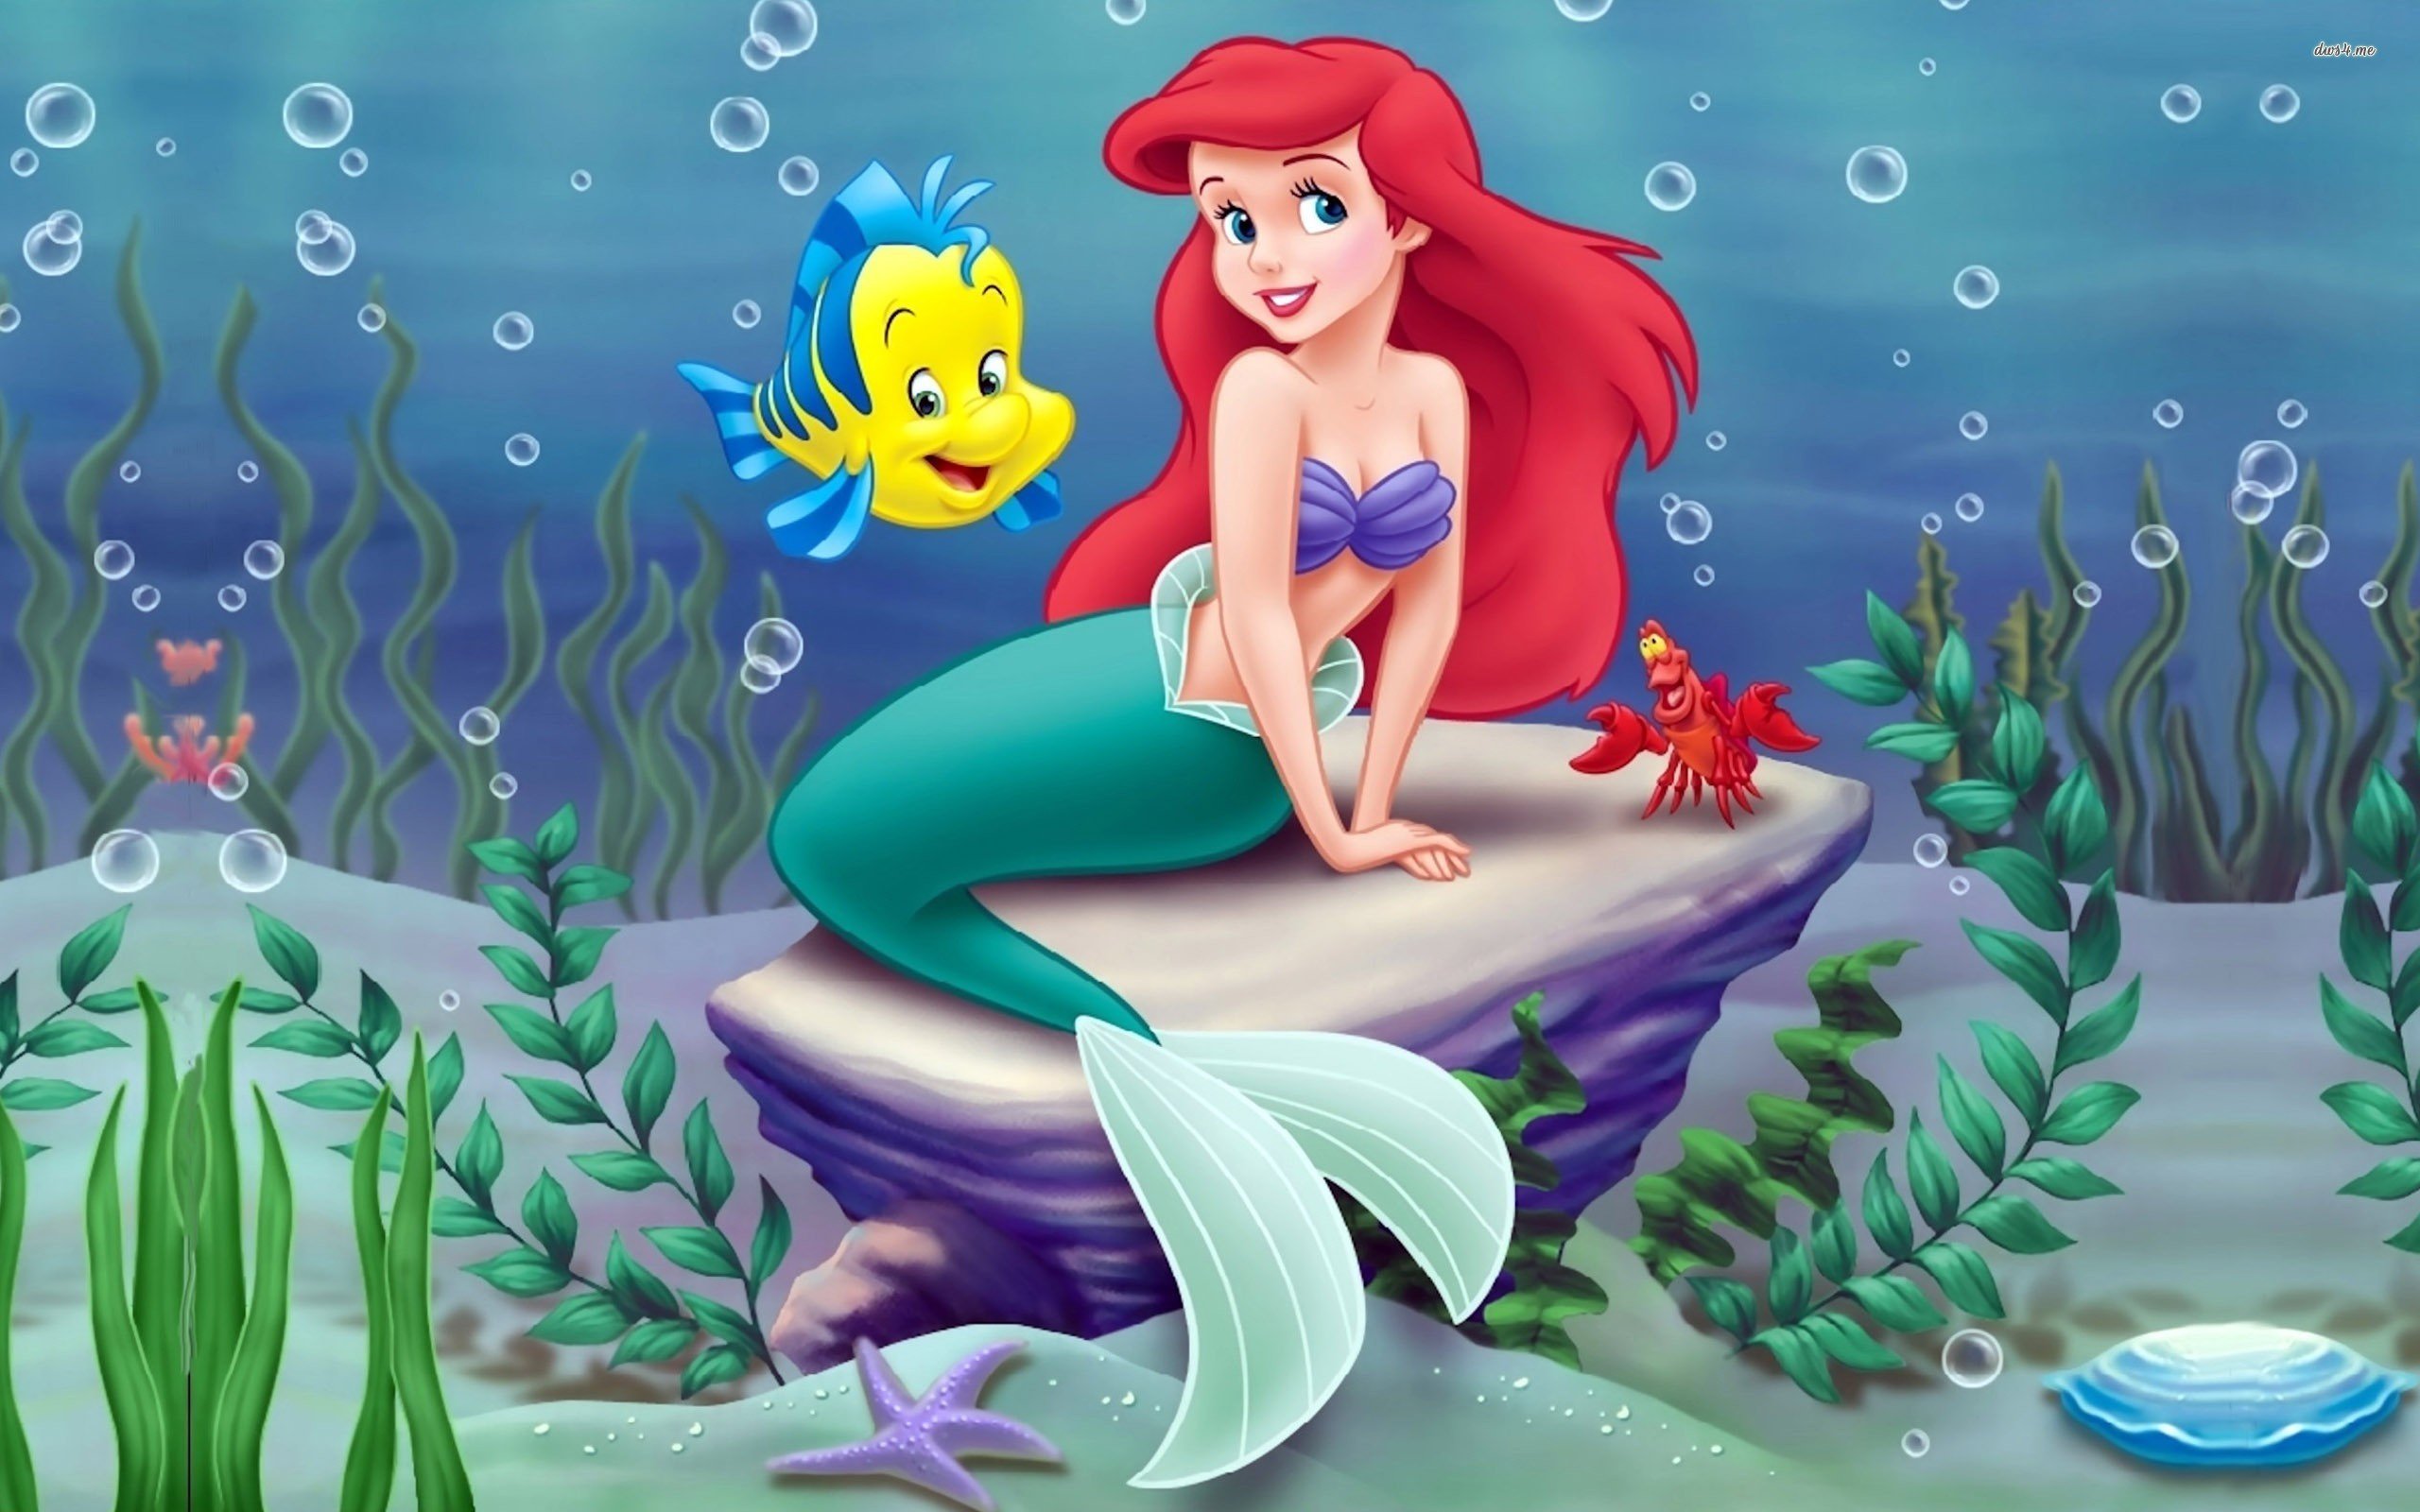 Little Mermaid Disney Fantasy Animation Cartoon Adventure Family